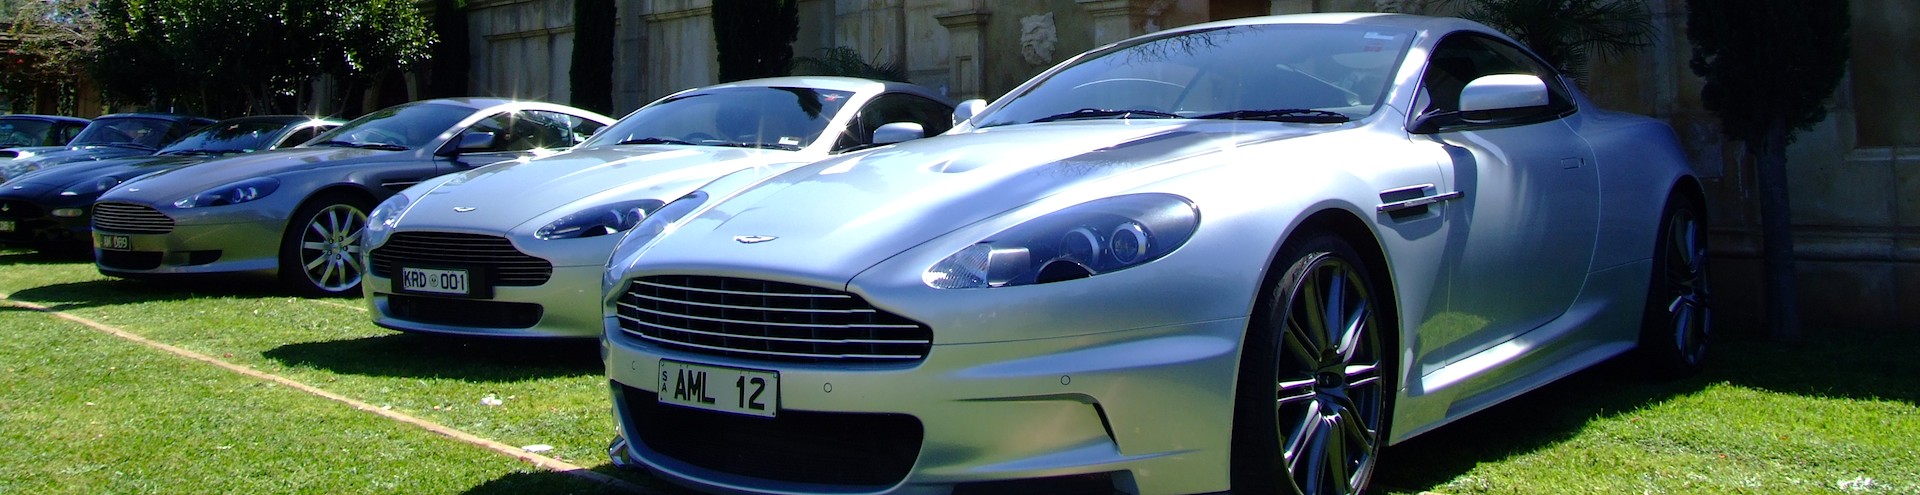 Aston Martin DB9. Copyright © Virtual Visions.